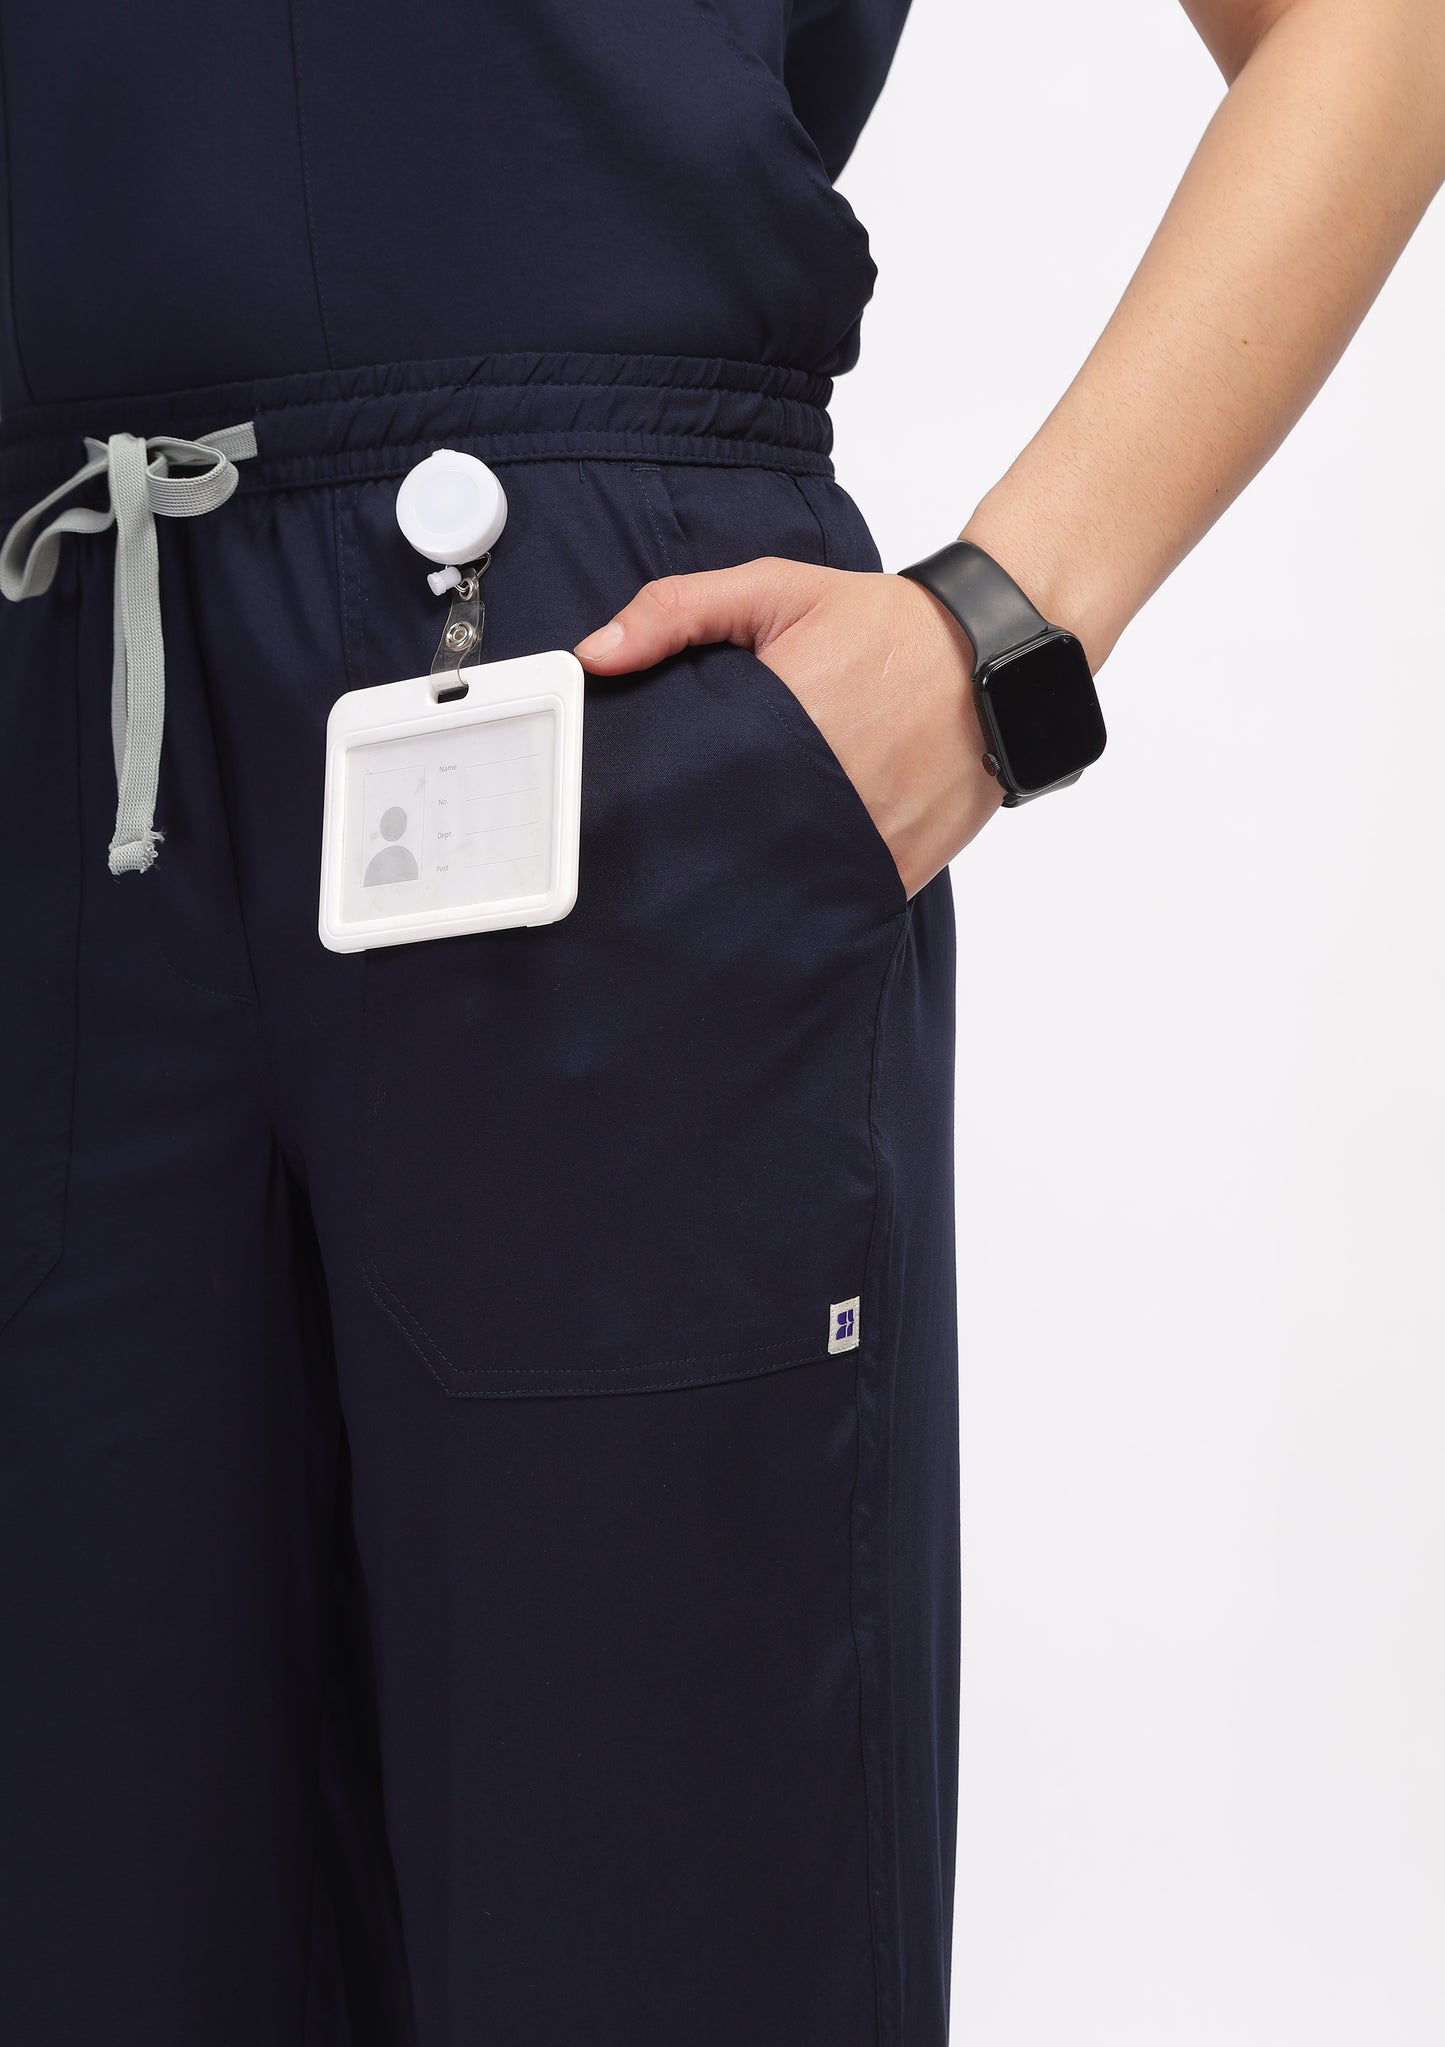 Ecoflex Lite Women's 5 Pocket (Navy Blue) Scrubs